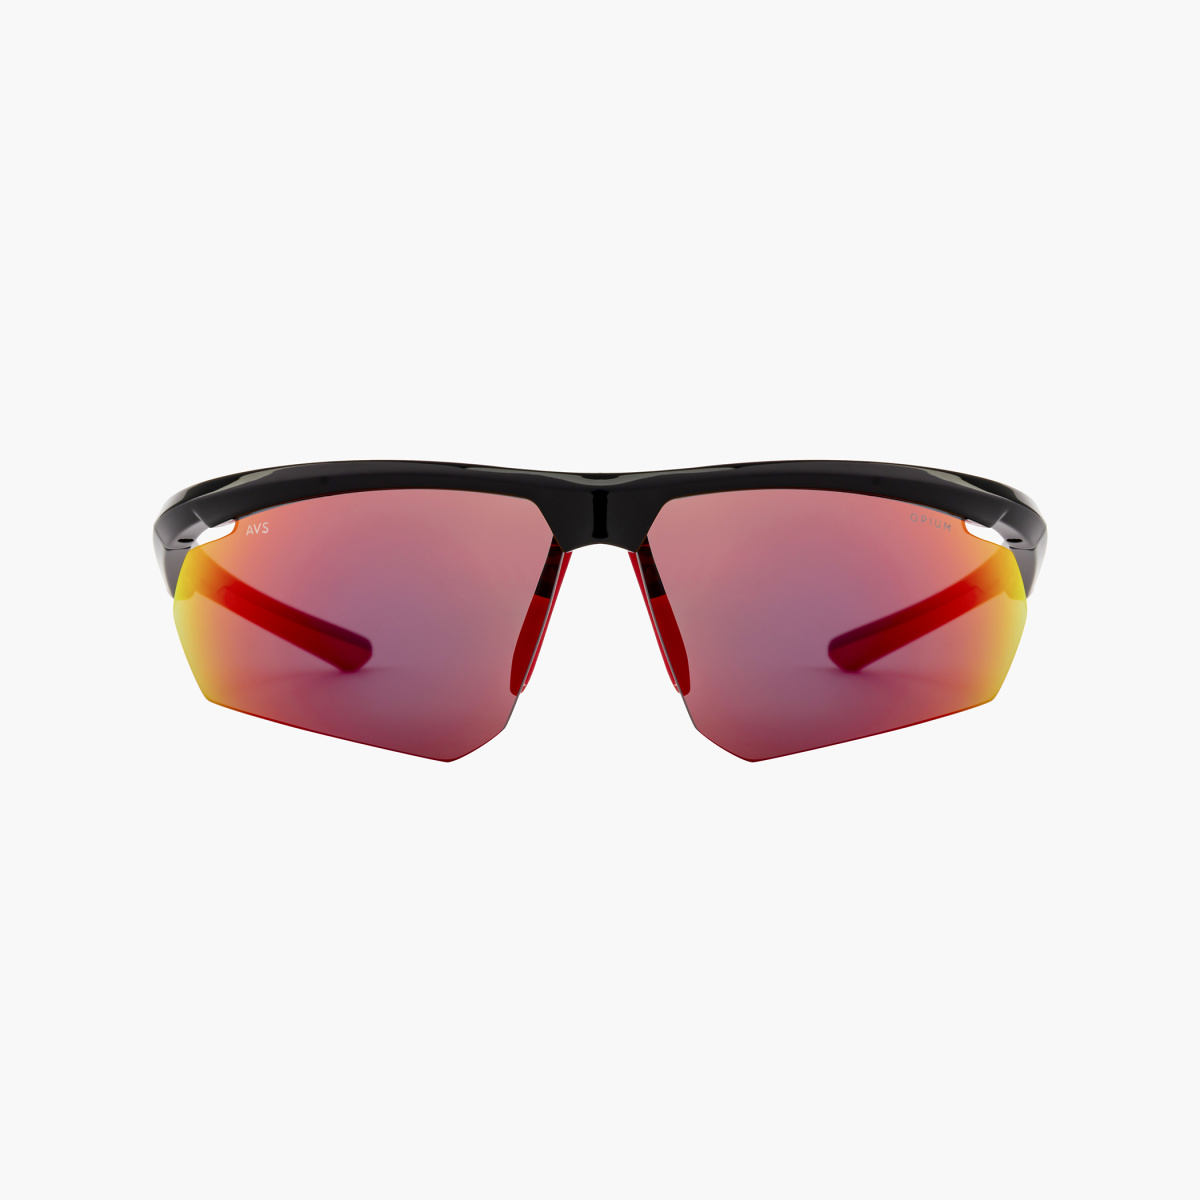 OPIUM Men UV-Protected AVS Sports Sunglasses - OP-1696-CO2